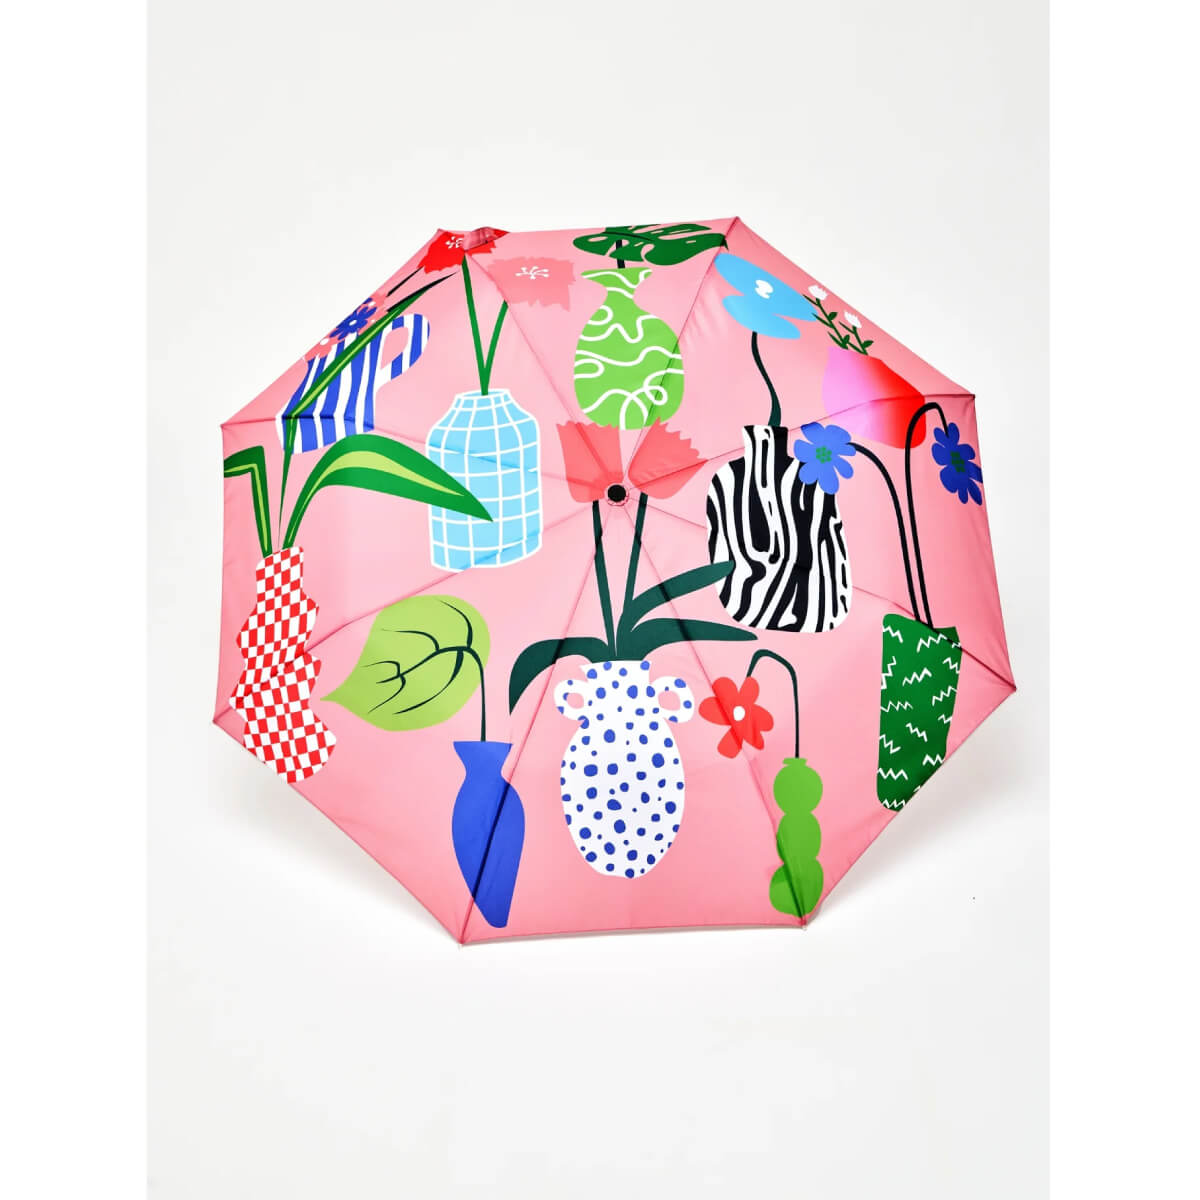 Vases Compact Duckhead Umbrella front pink | MILK MONEY milkmoney.co | white elephant gift ideas, gift, mother's day gift ideas, white elephant gift, gift shops near me